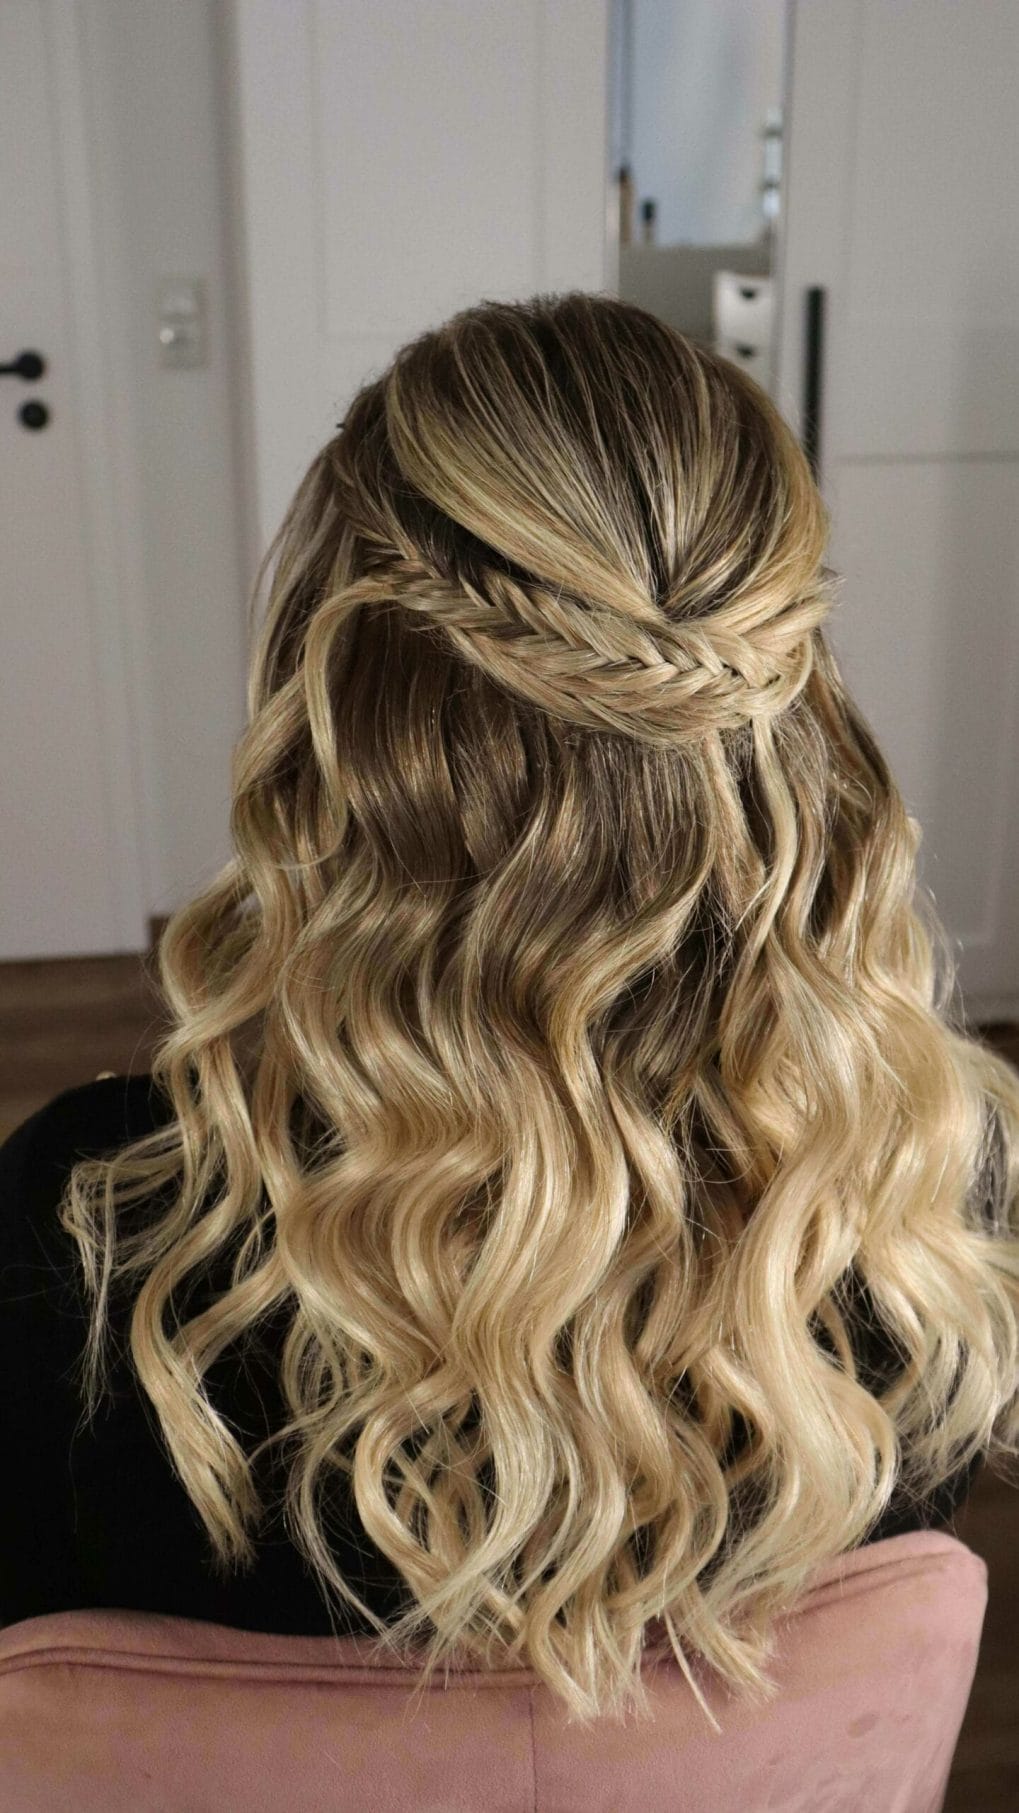 Tight twisty half-up braid crowns head leading into blonde curls